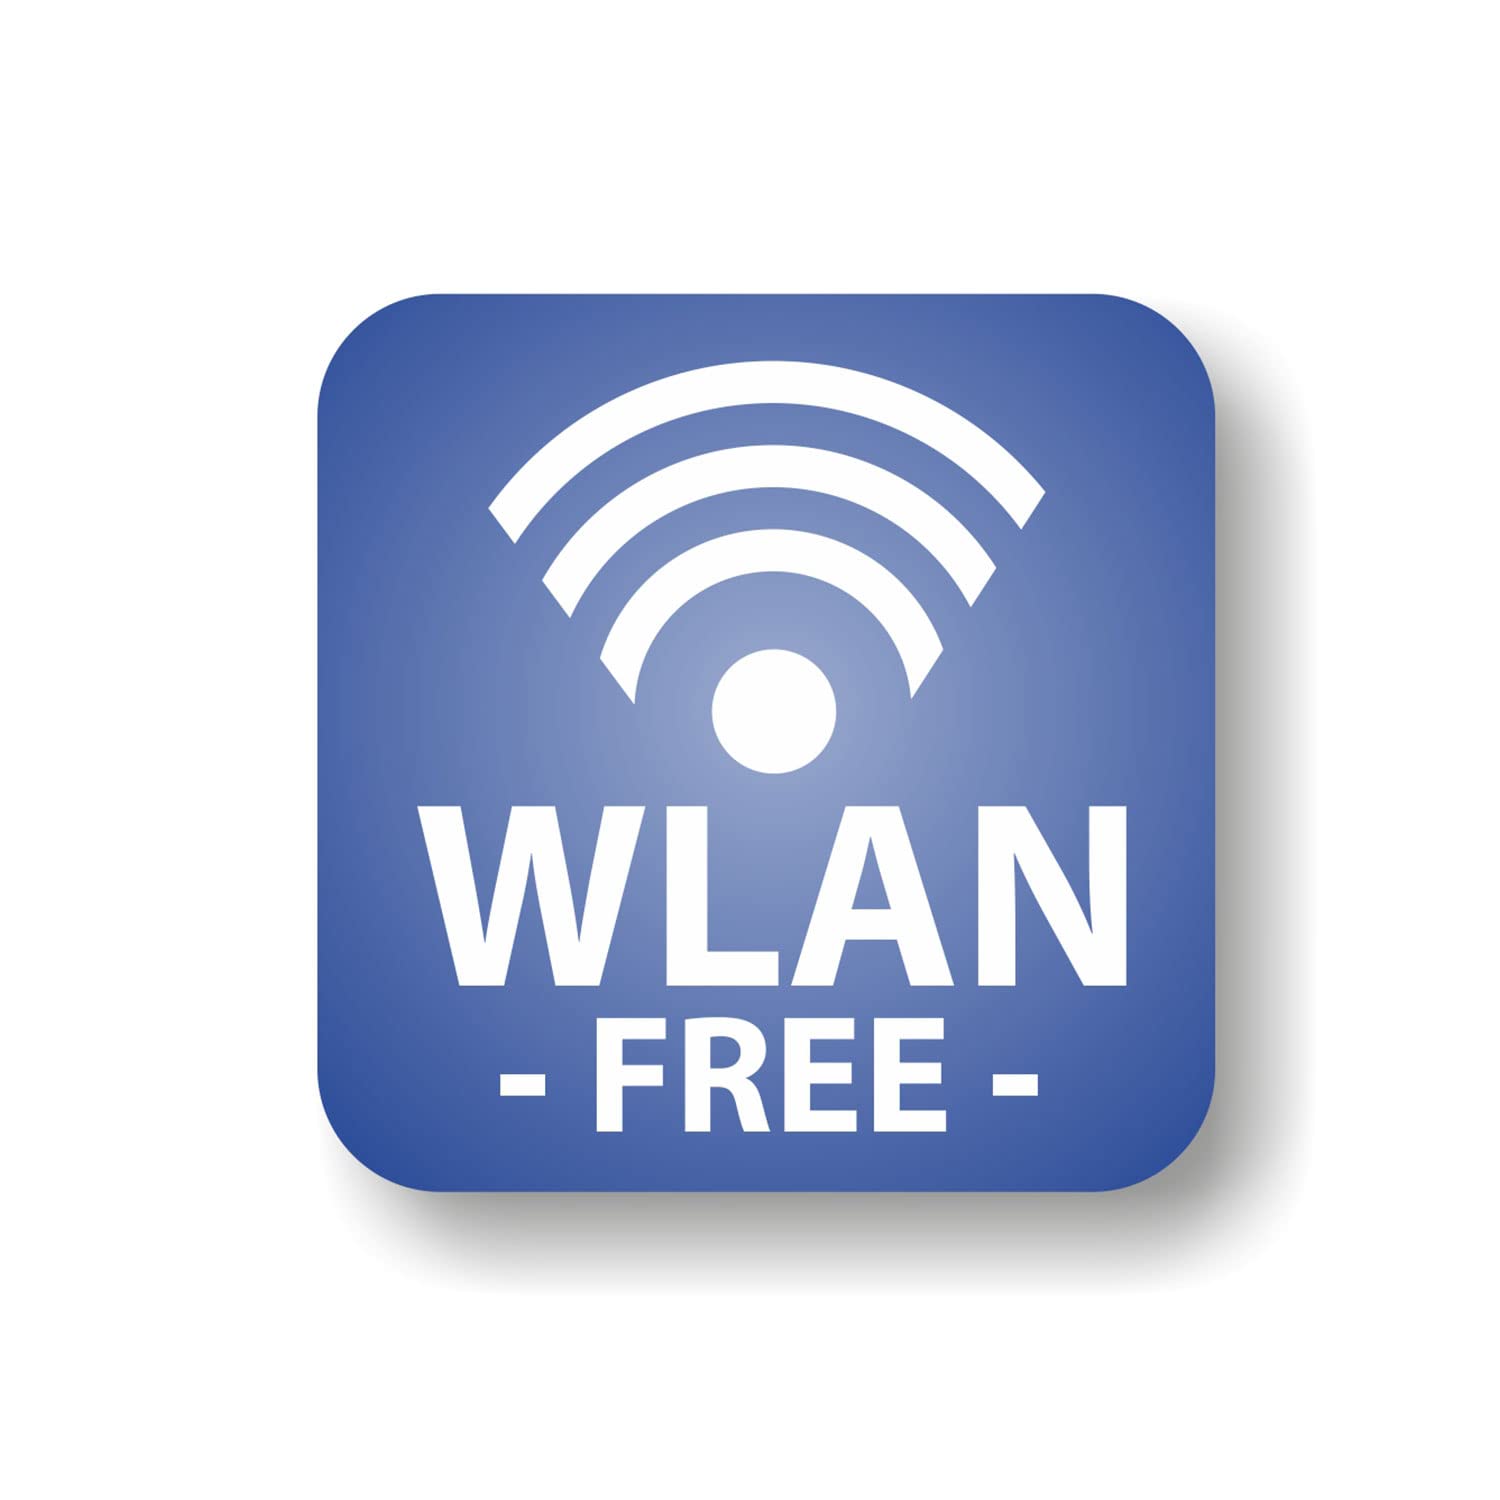 Sticker WLAN -FREE I iSecur®, For your bakery, cafe, restaurant or shop. | Free Wlan | 30 x 30 cm I hin_492 von iSecur